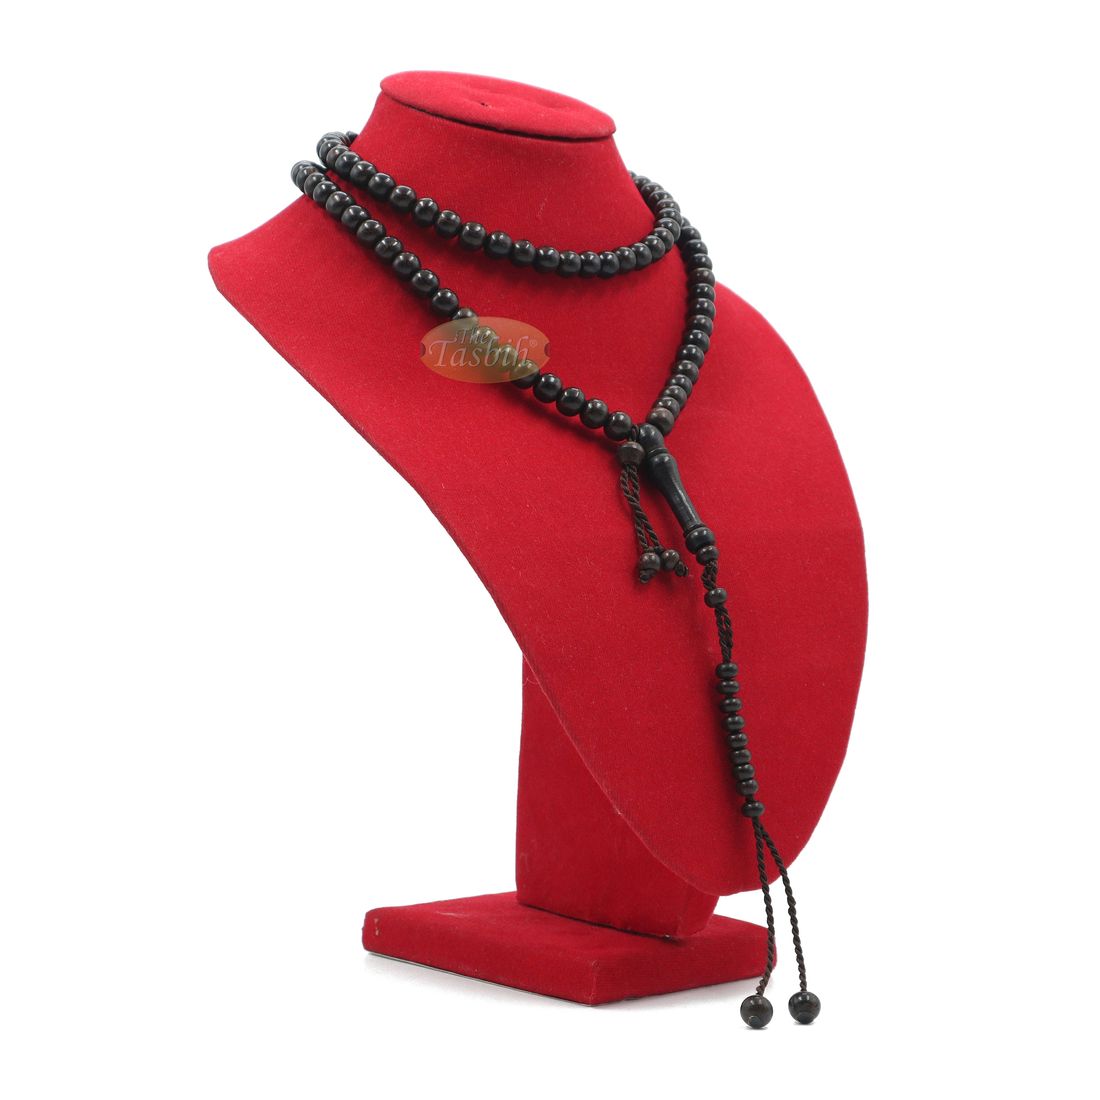 Tamarind 9mm Dense Wood Rosary Tasbih 99-beads & Counters